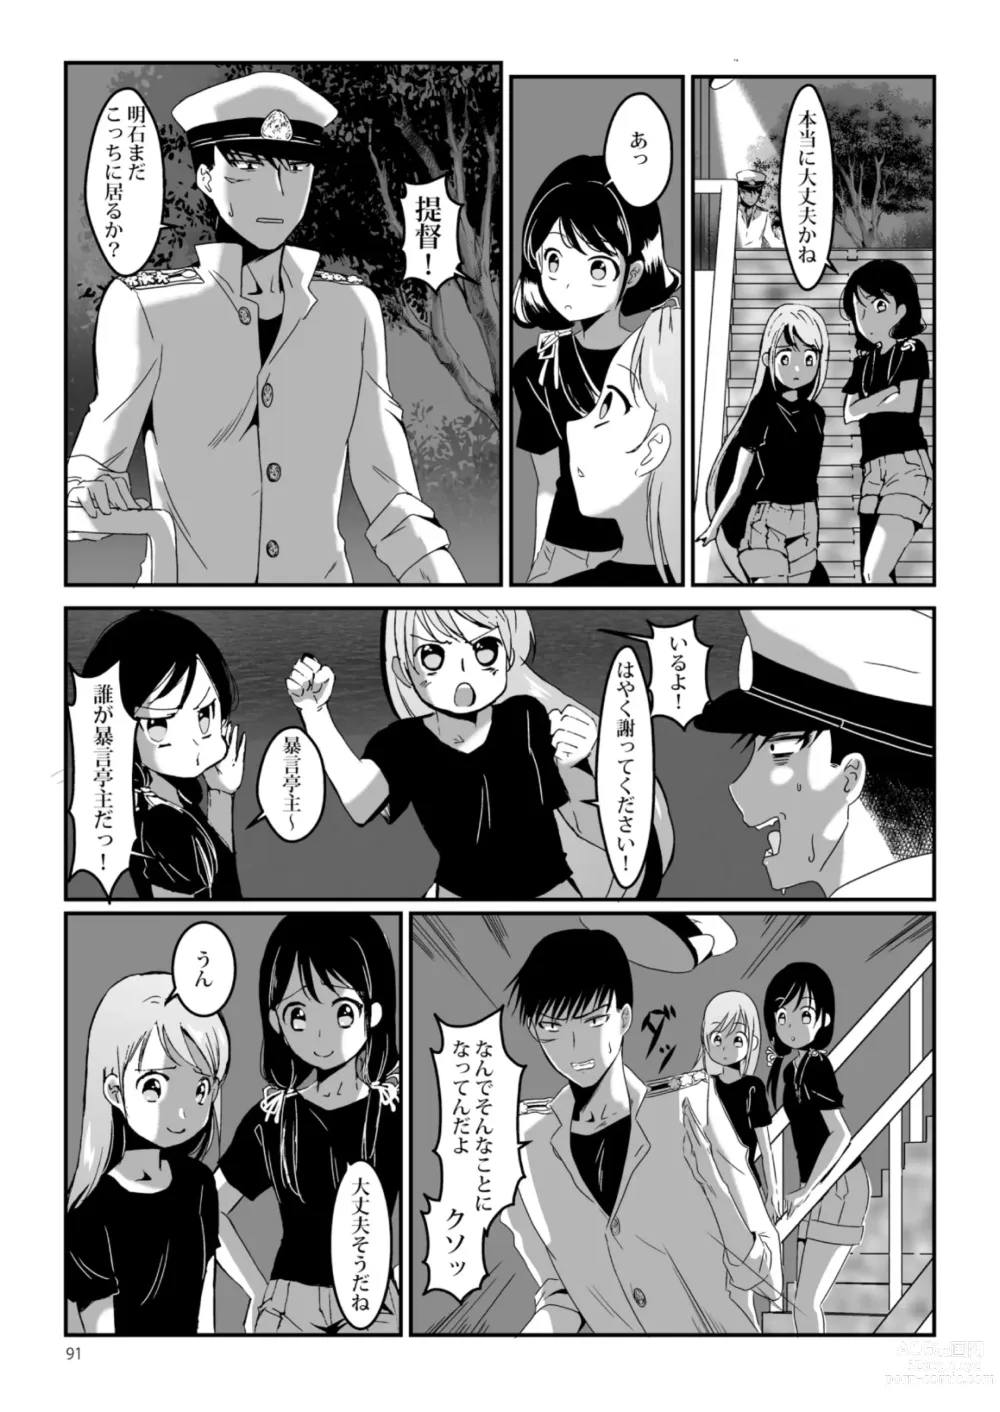 Page 91 of doujinshi Akashi to Ai no Hibi